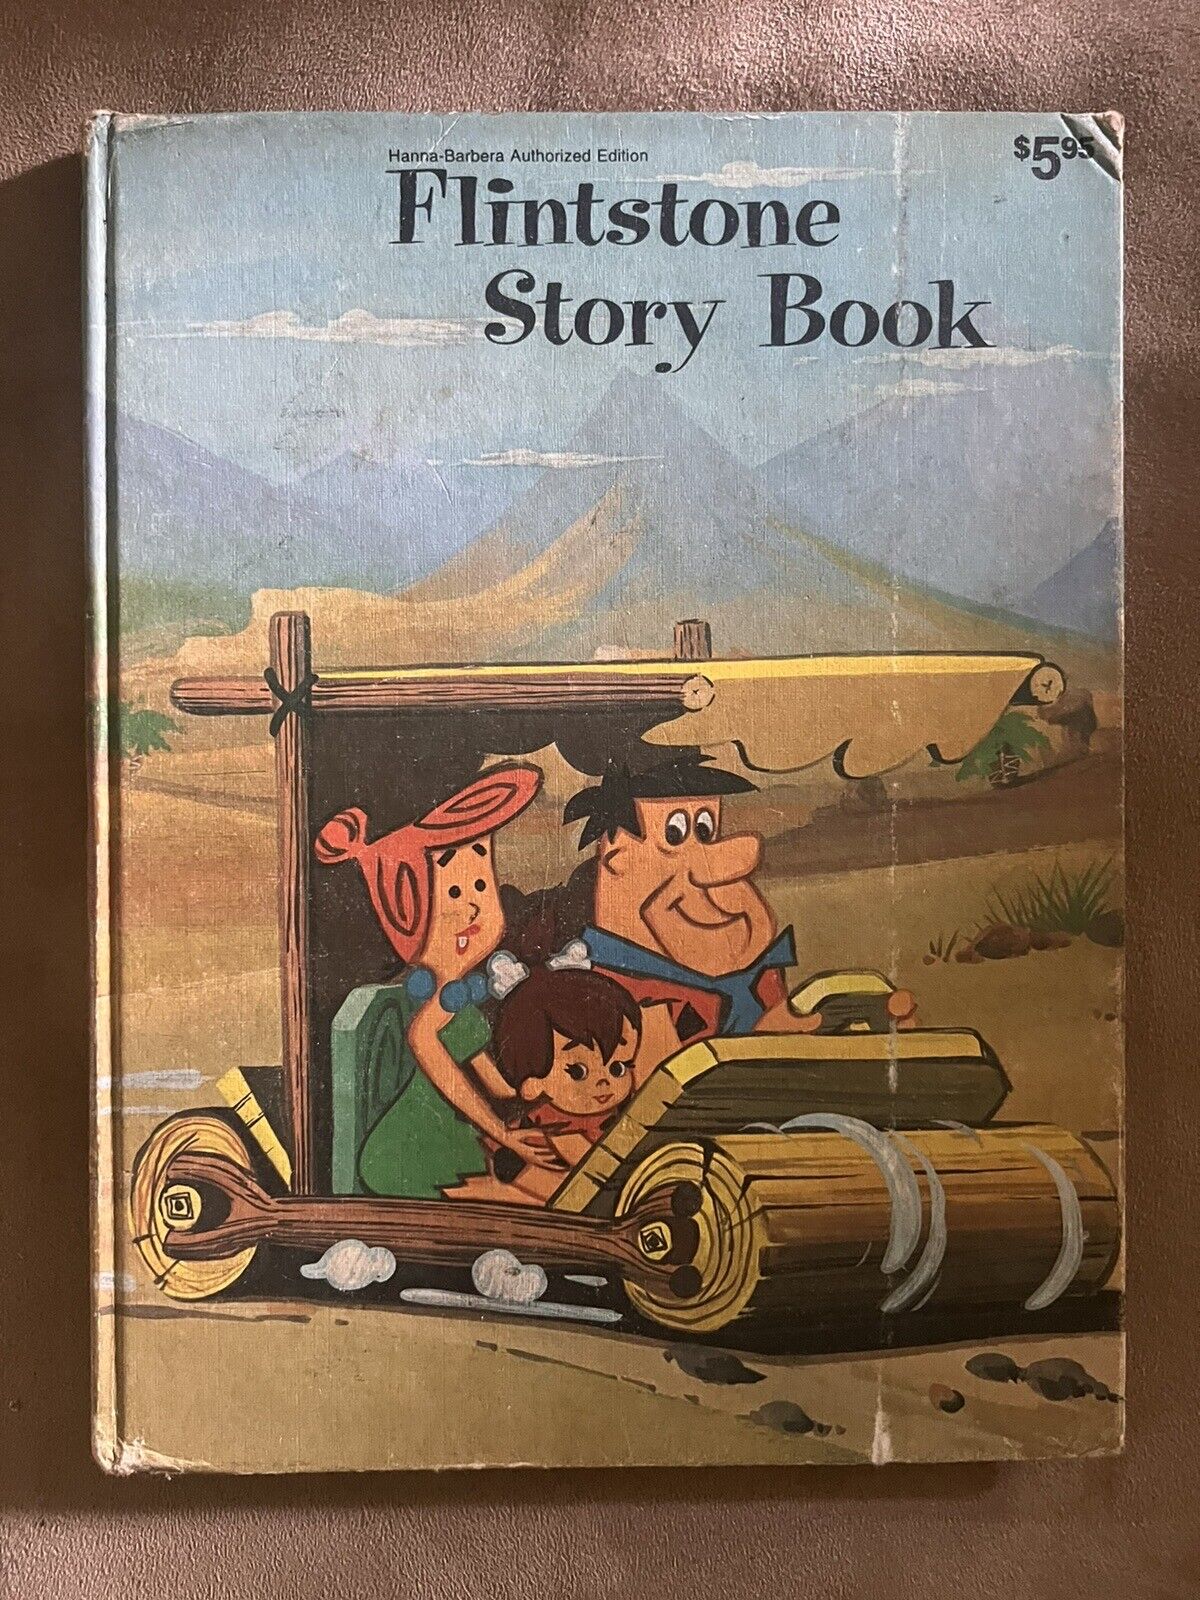 Vintage 1974 Flintstone STORY BOOK oversize hardcover Hanna-Barbera